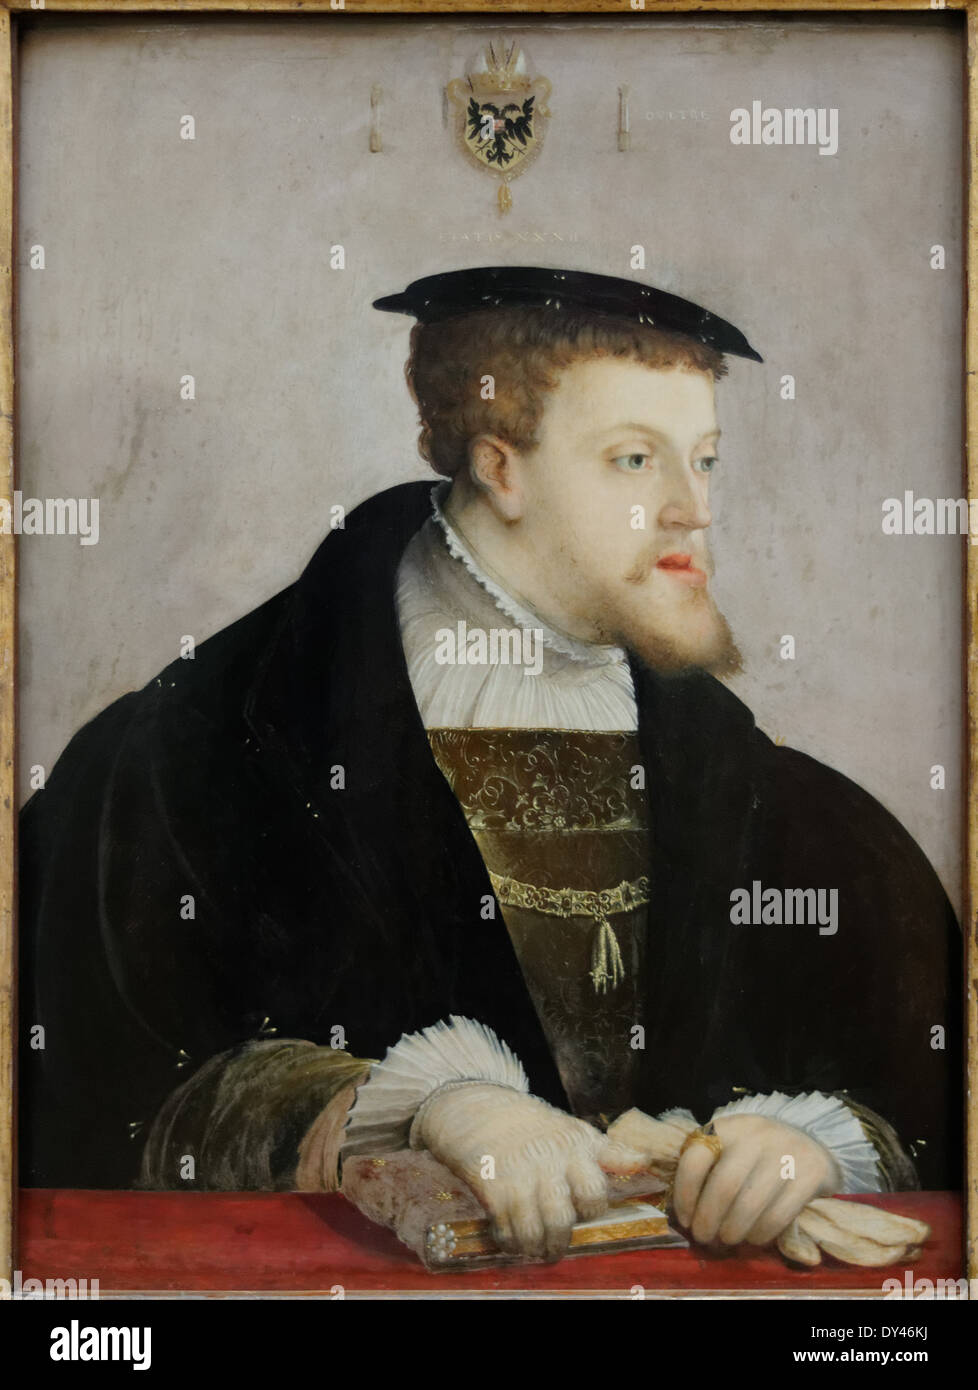 Christoph Amberger - Kaiser Karl V- 1532 - XVI secolo - Scuola Tedesca - Gemäldegalerie - Berlino Foto Stock